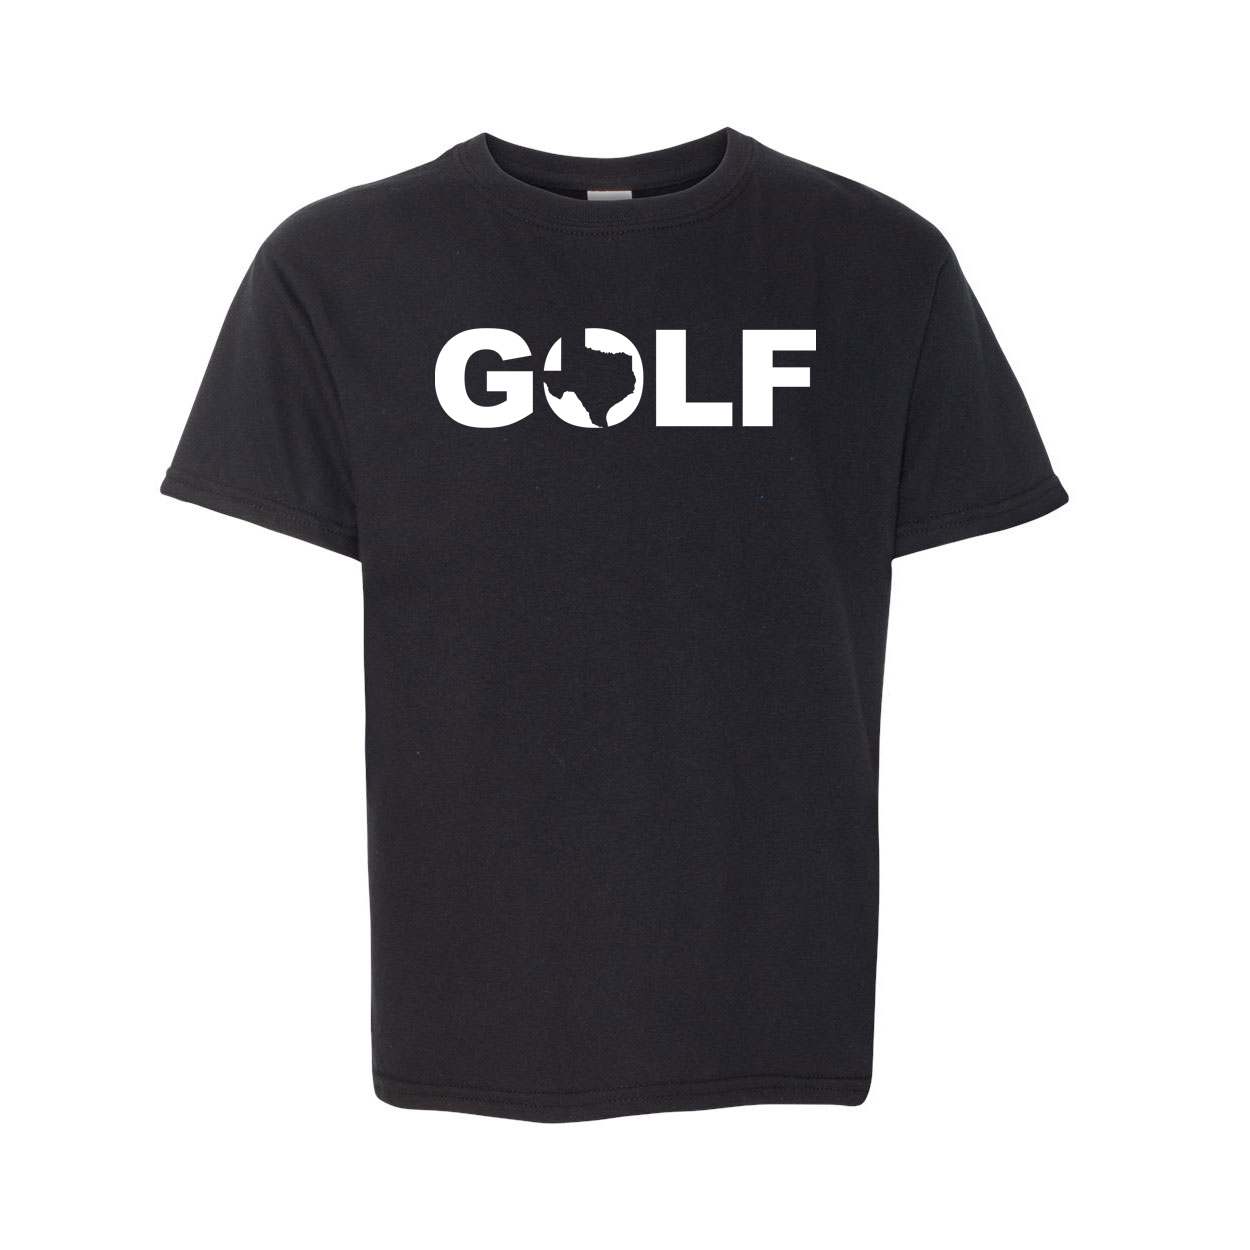 Golf Texas Classic Youth T-Shirt Black (White Logo)